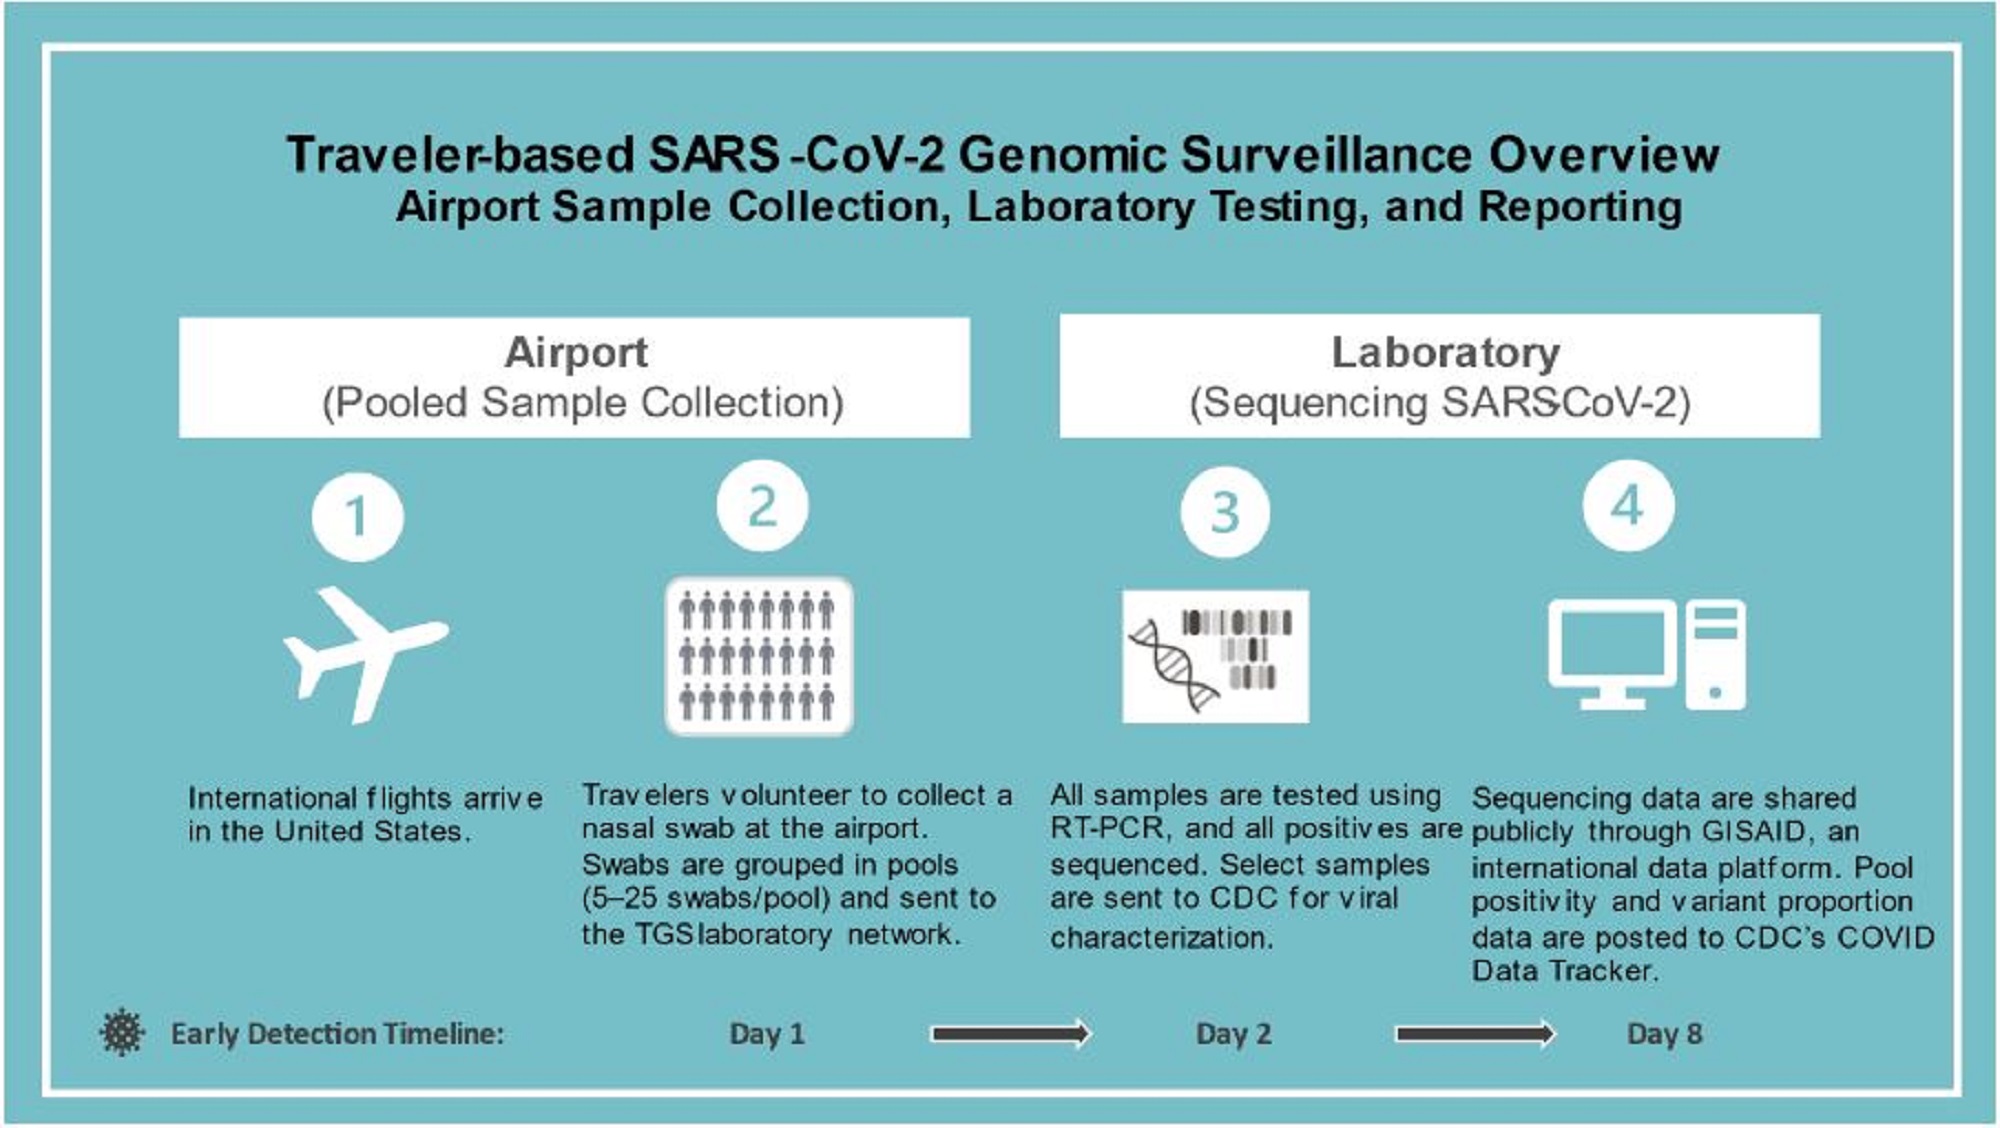 Traveler-based SARS-CoV-2 Genomic Surveillance Overview diagram